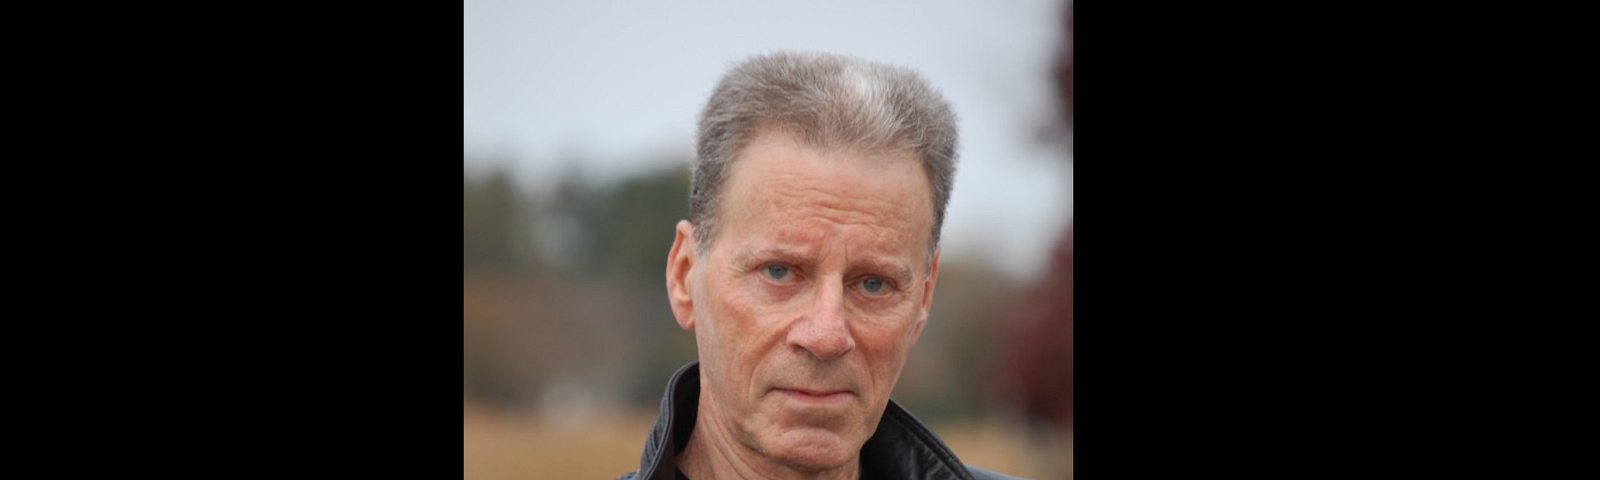 Author Mark Rubinstein